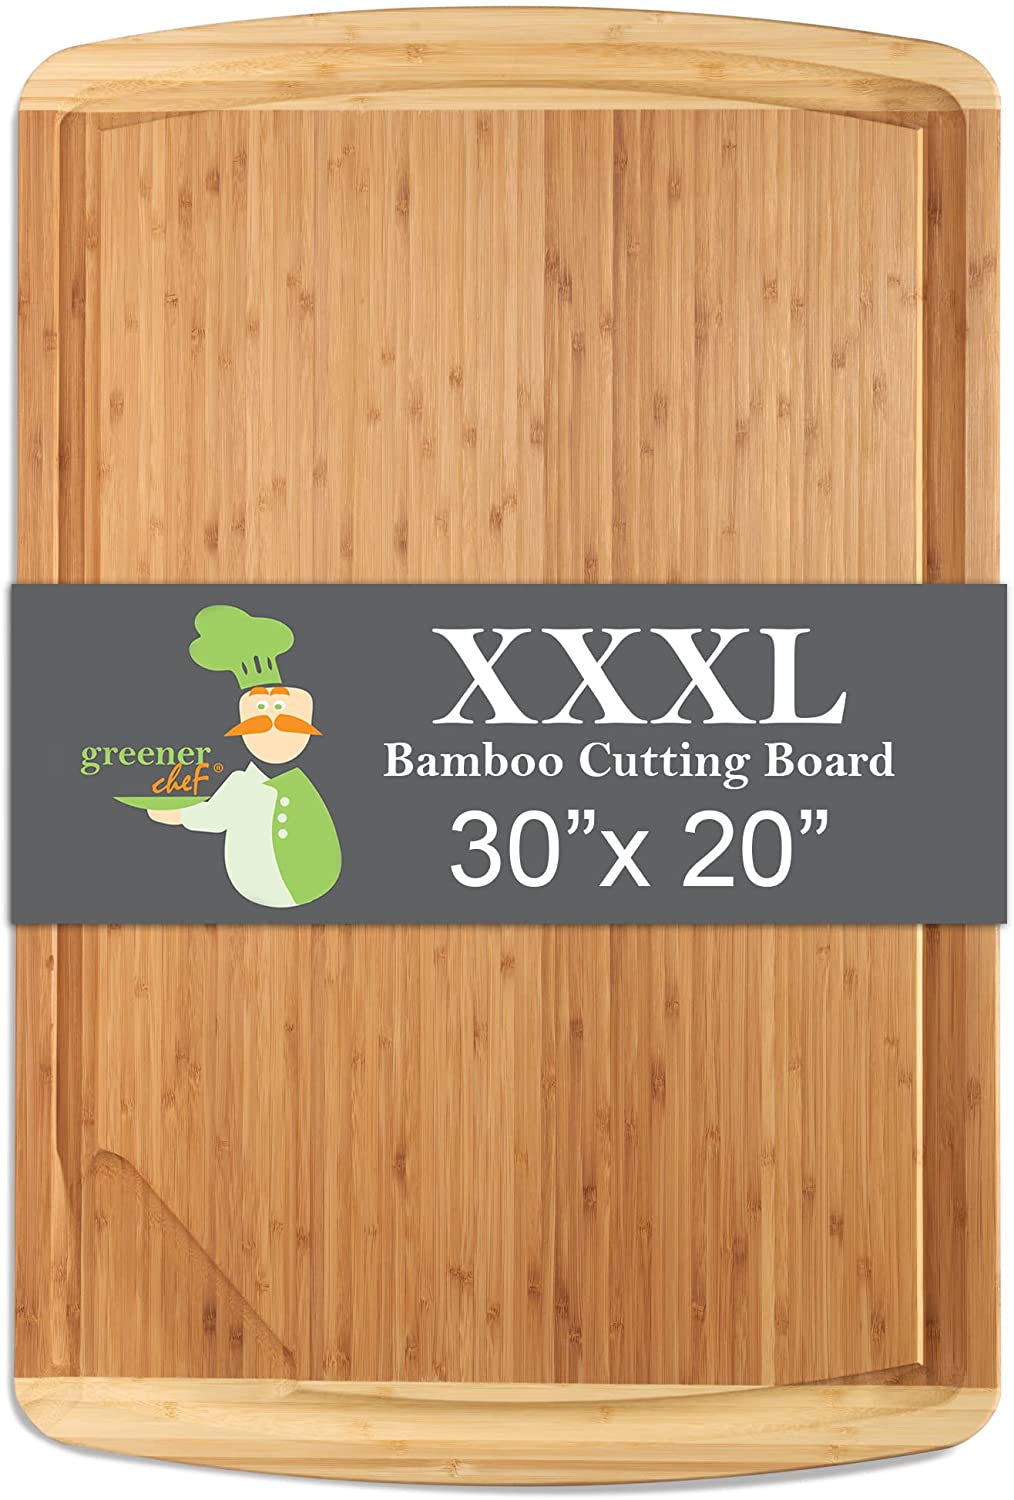 30 x 20 Inch MASSIVE XXXL Extra Large Bamboo Cutting Board